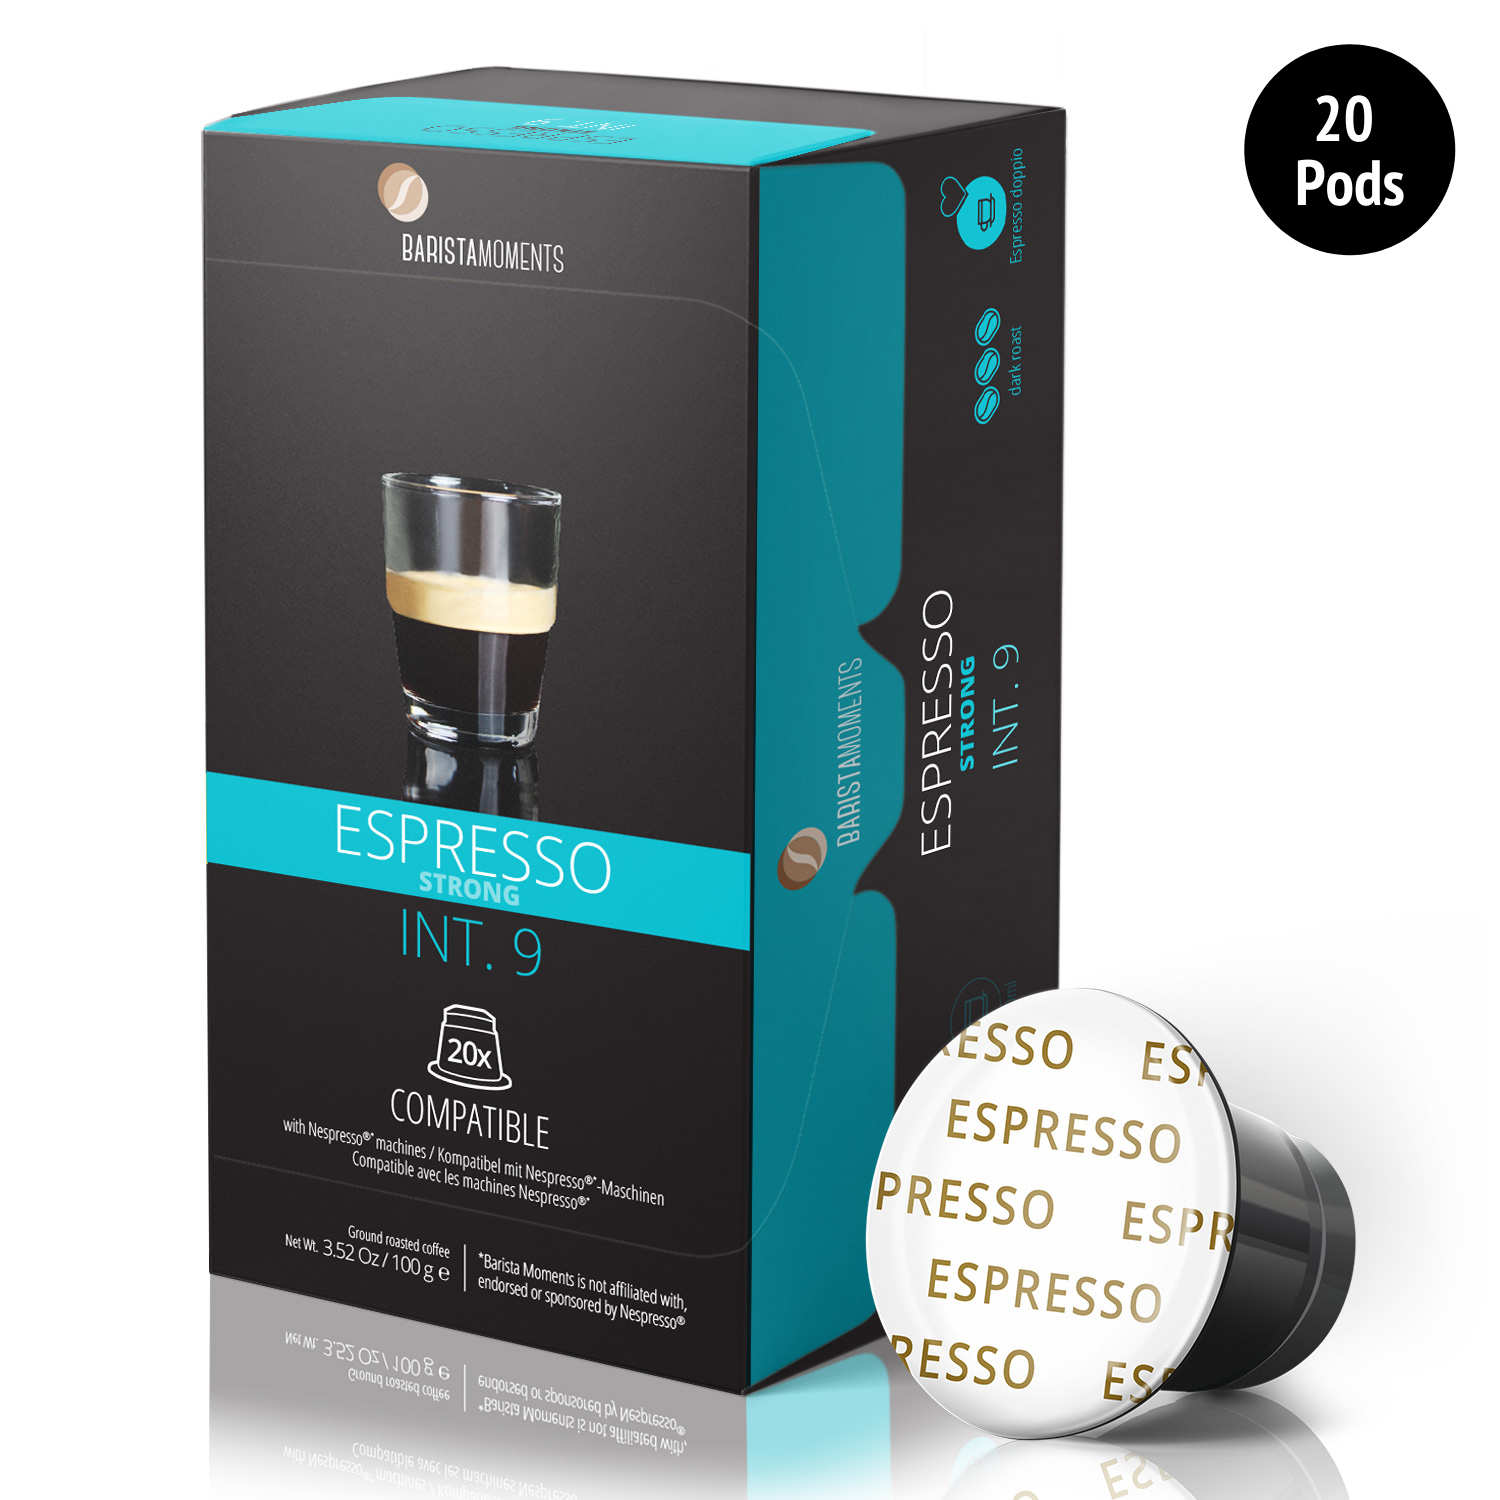 Elite Coffee Capsules 10: Strong Espresso